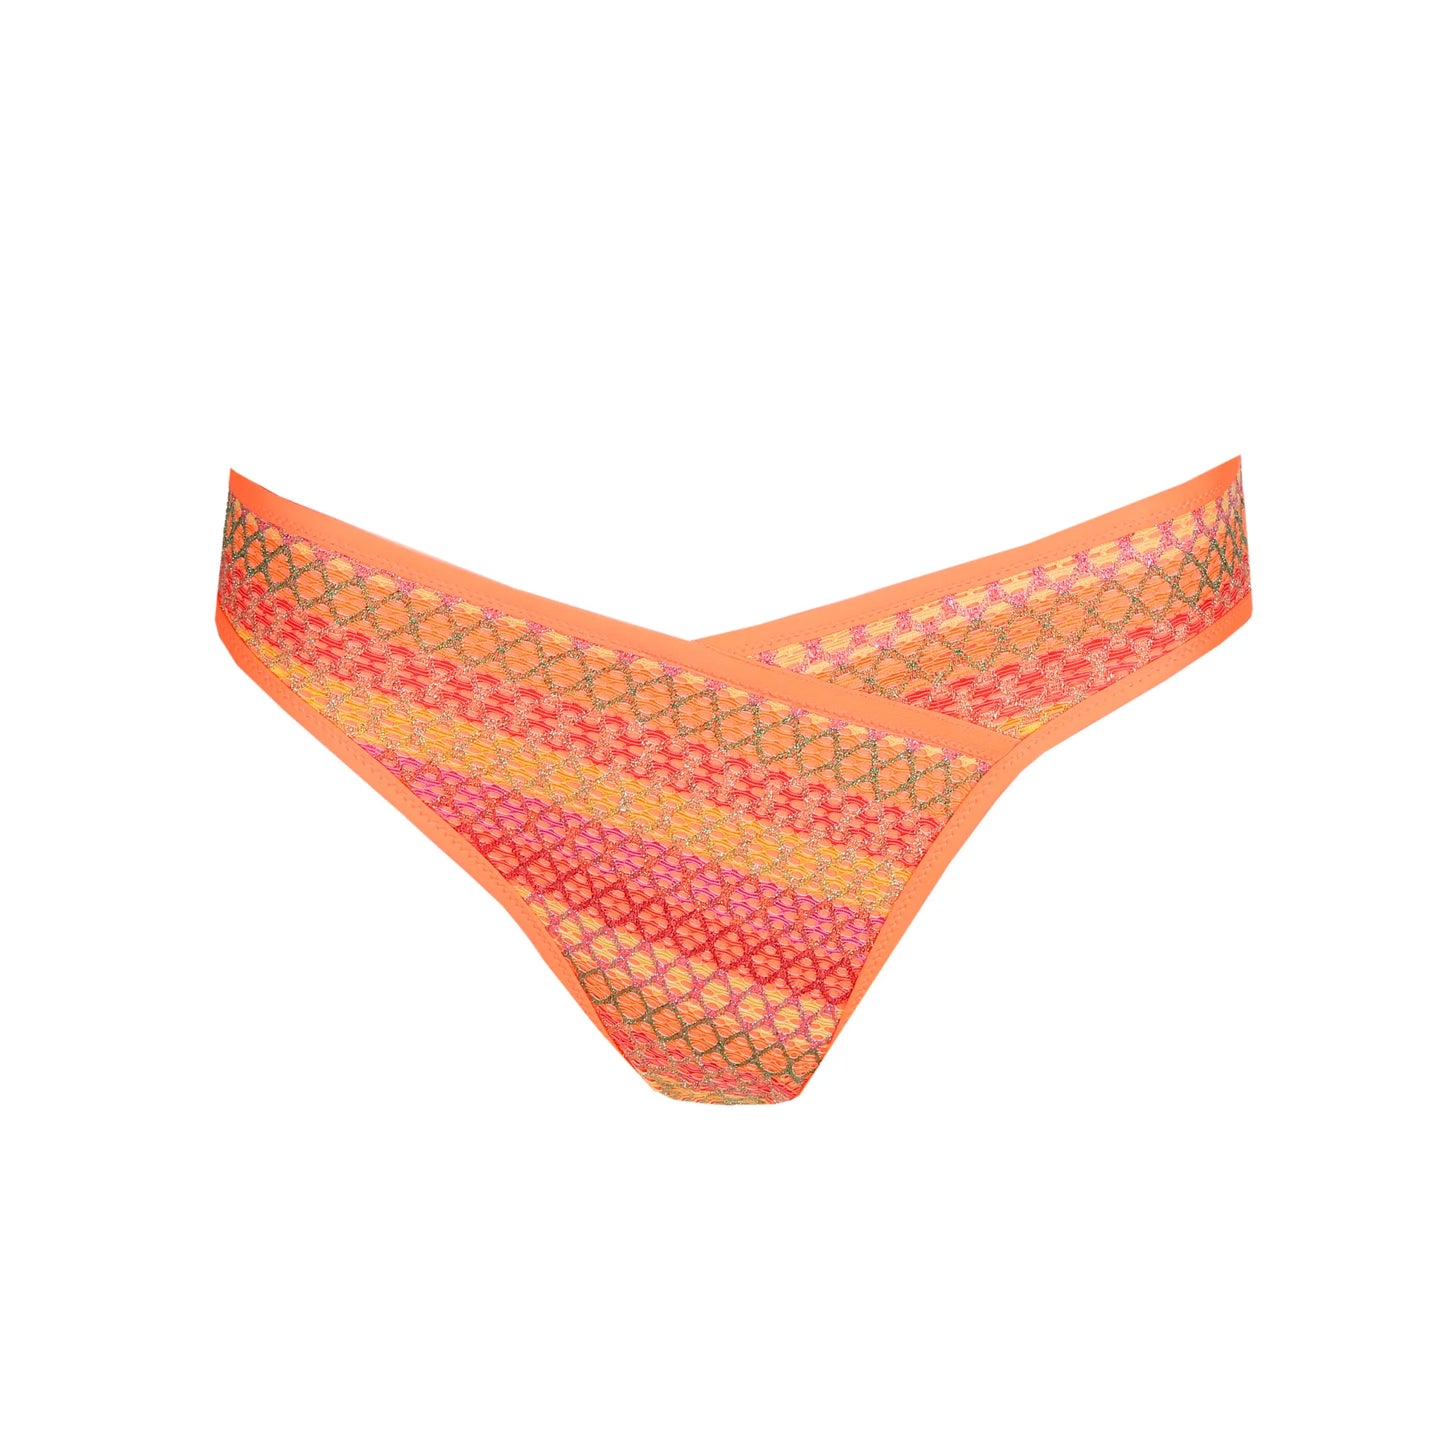 Marie Jo Swim Voorgevormde Balconette Bikini - Almoshi 1007119 / 1007150 - Juicy Peach